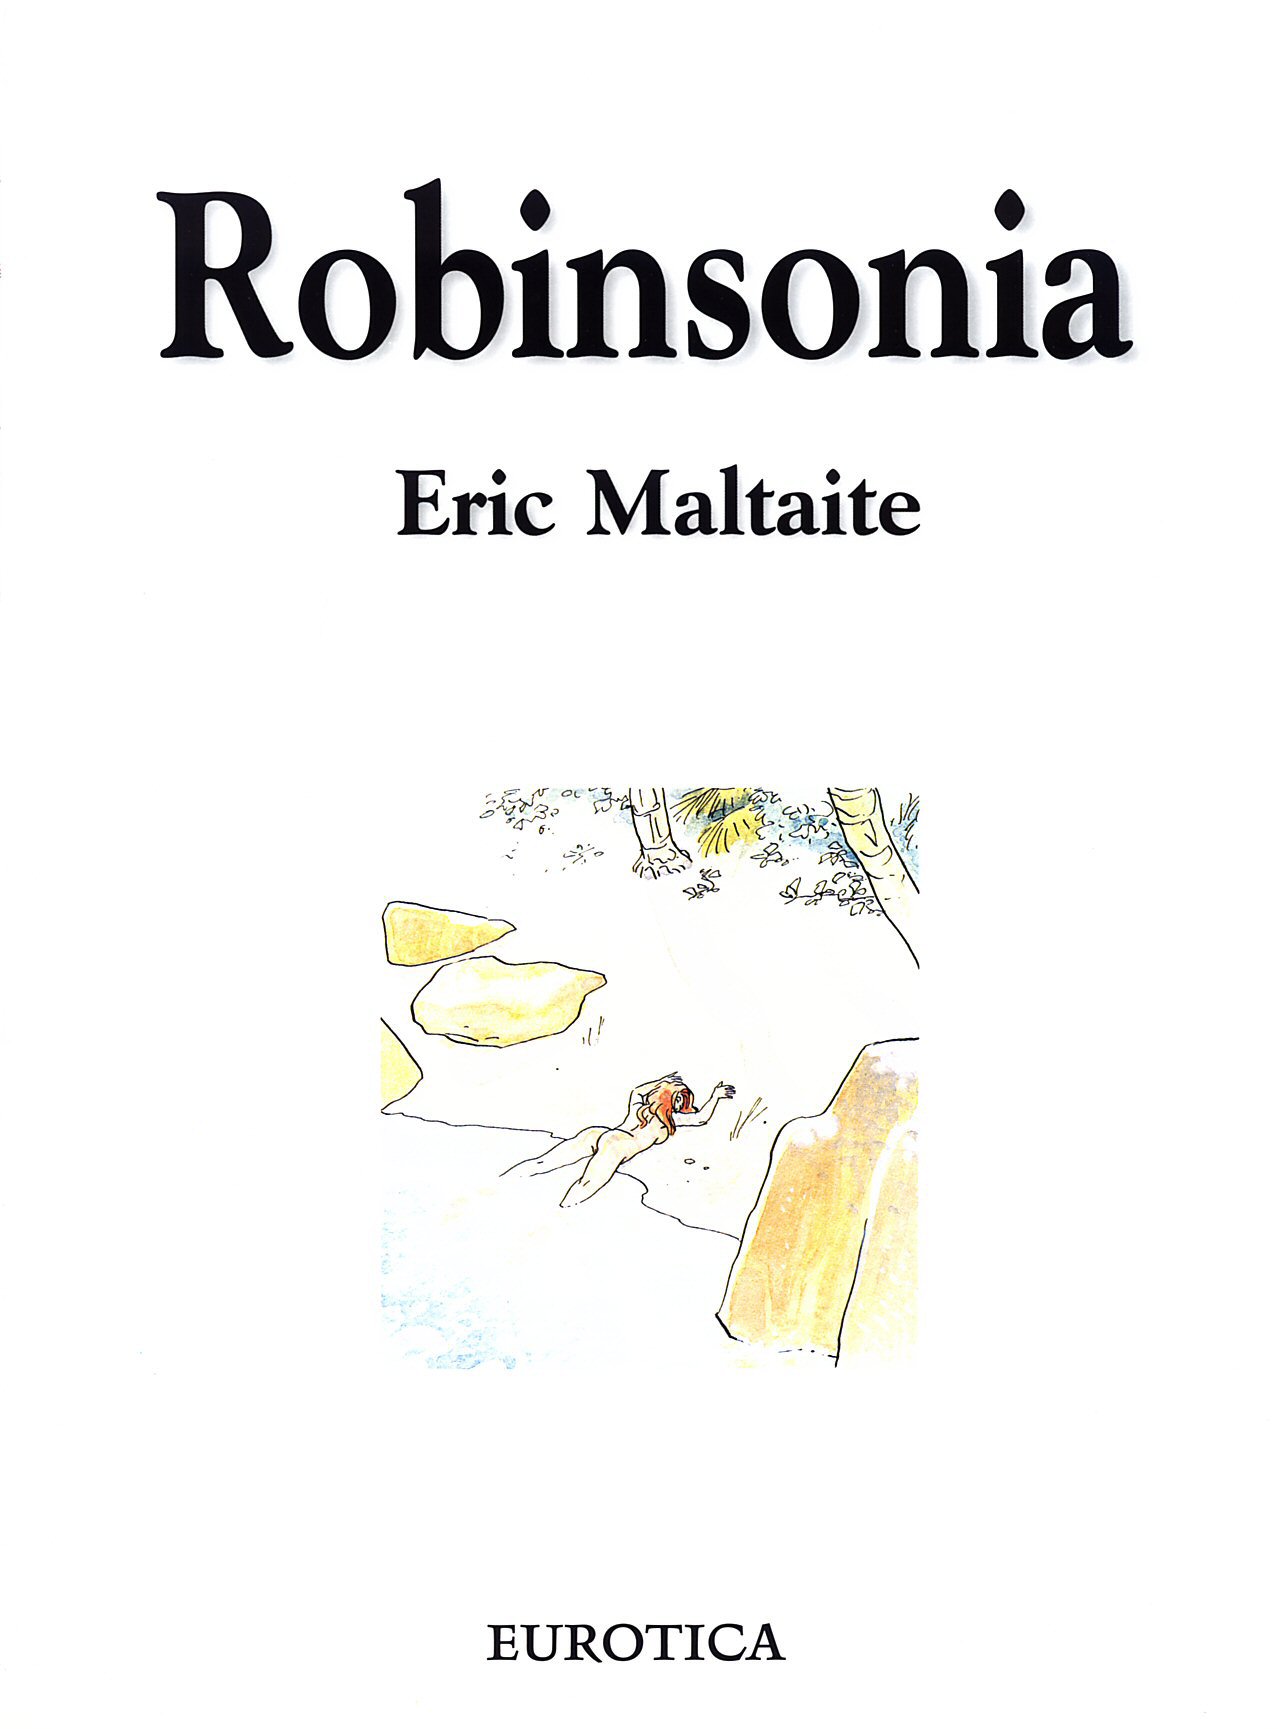 Read online Robinsonia comic -  Issue # Full - 4